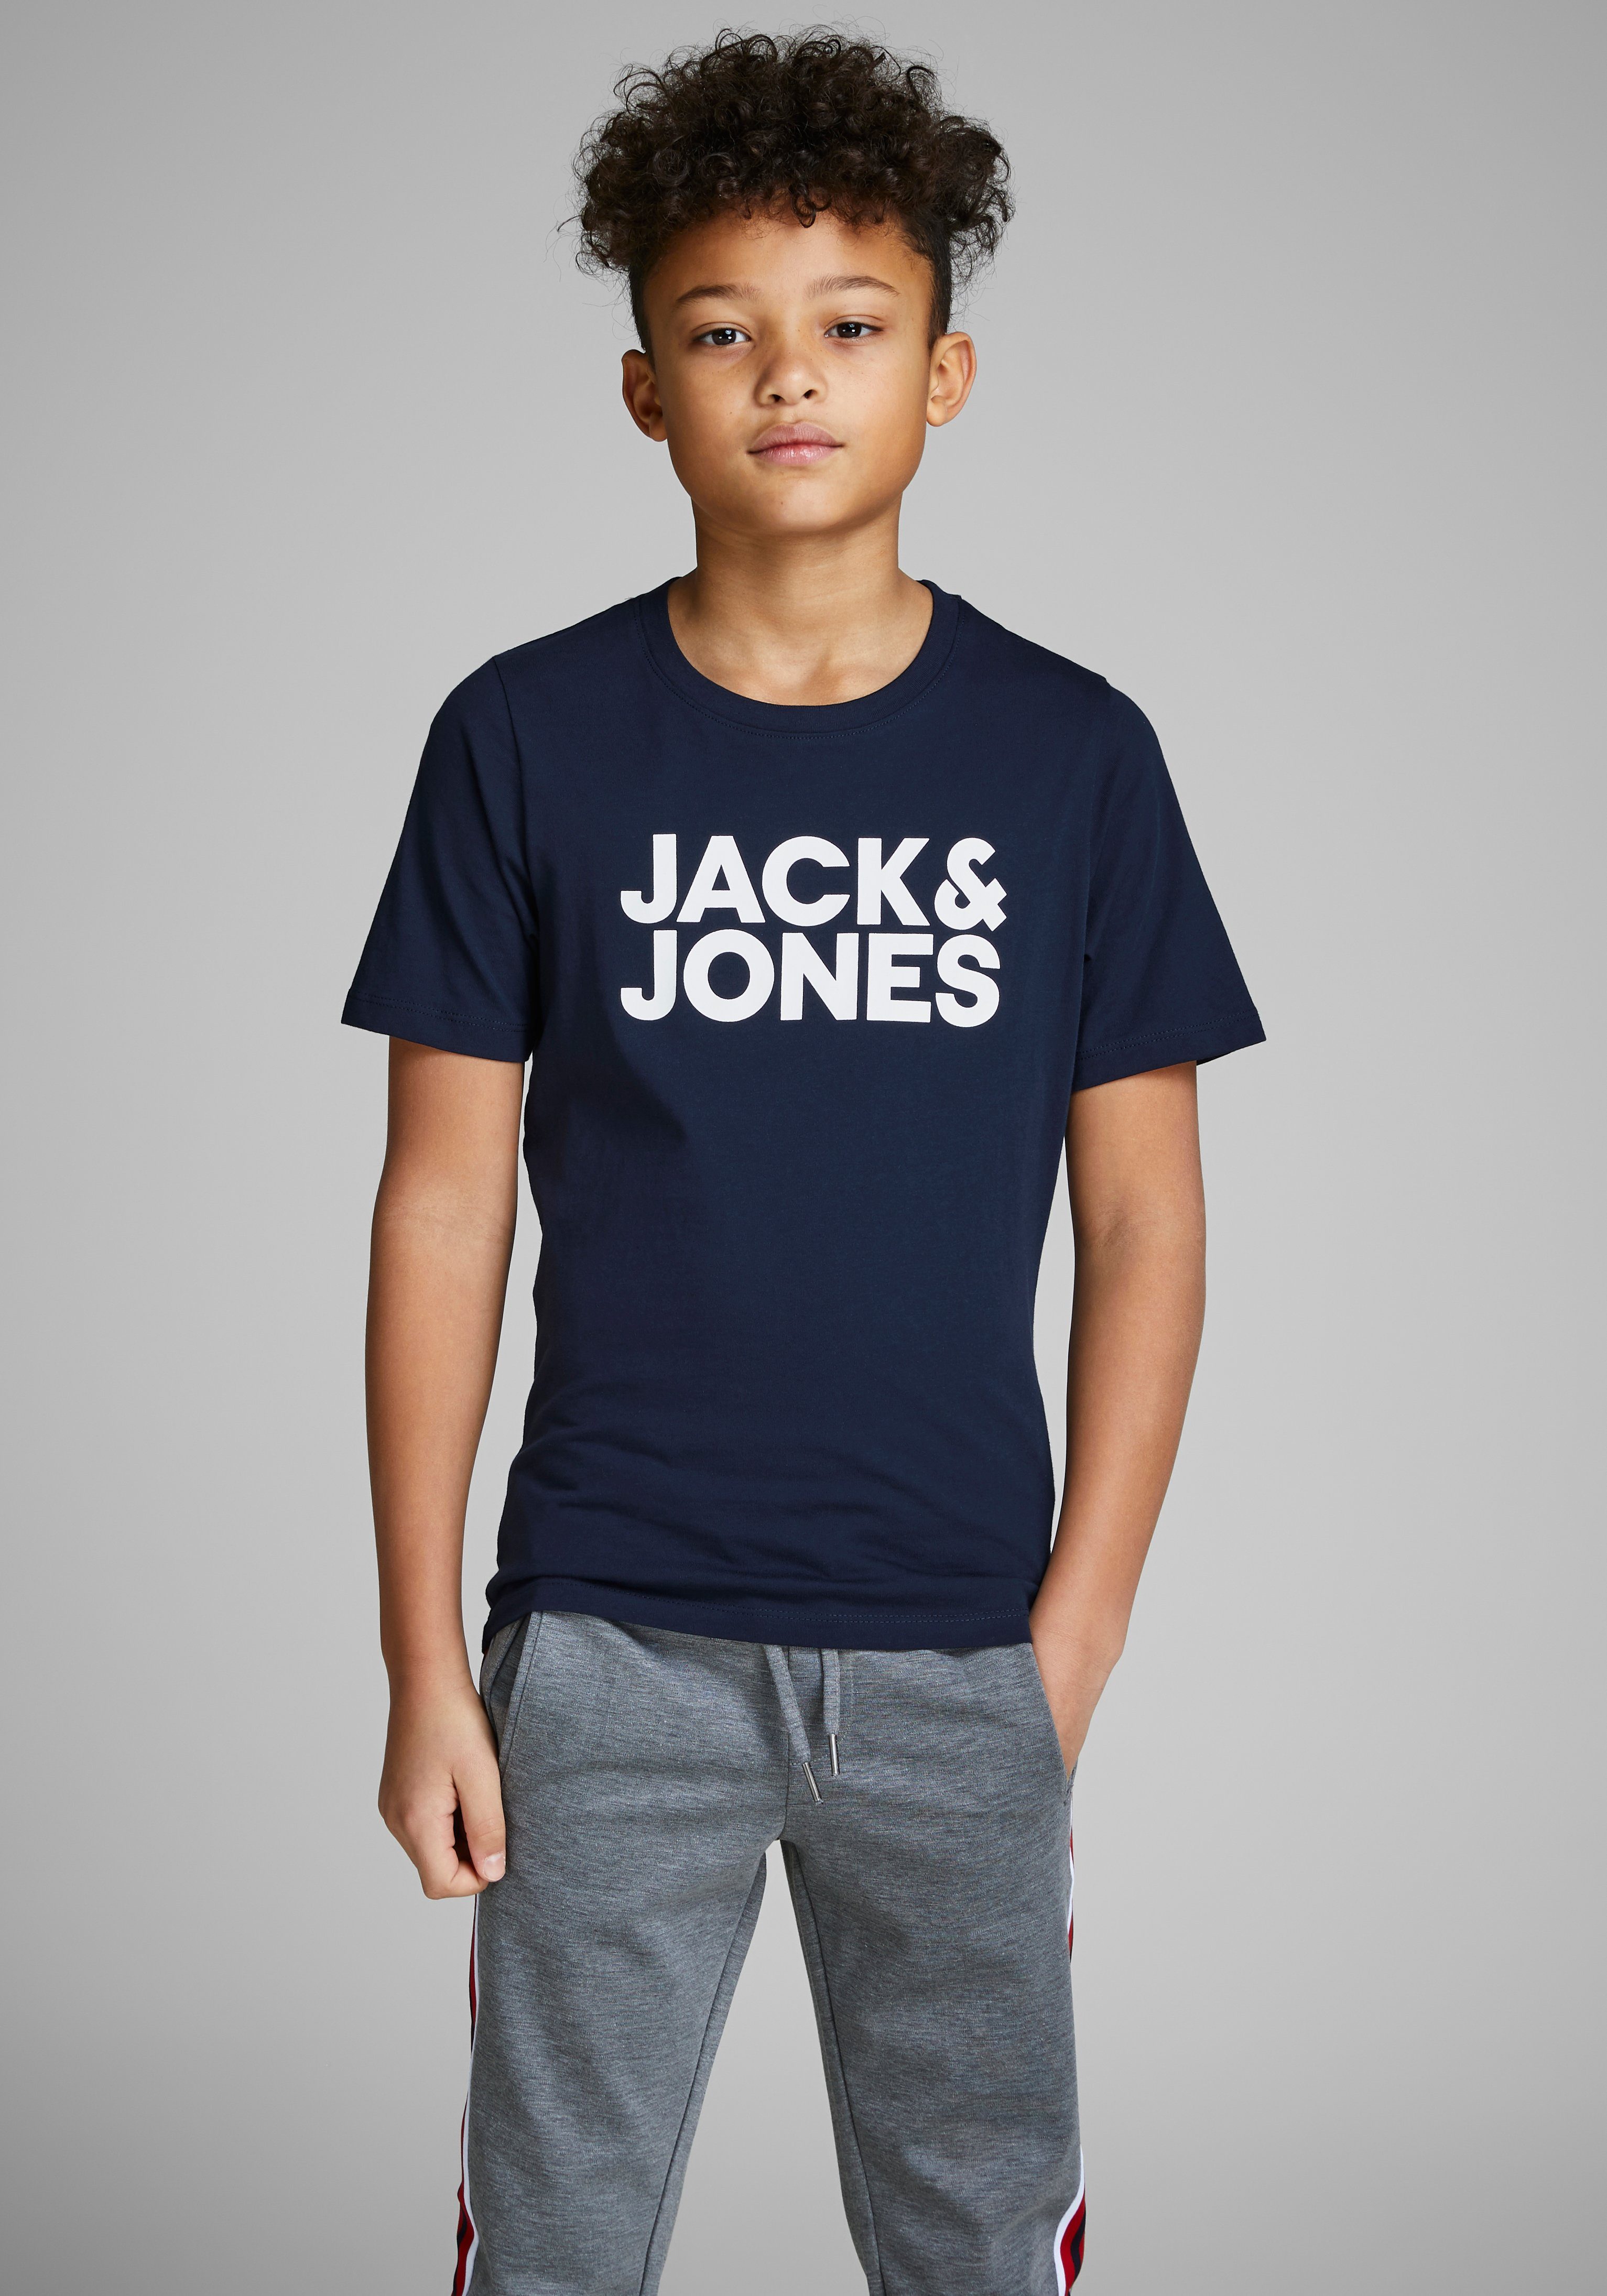 Karu toernooi Afbreken Jack & Jones Junior T-shirt online verkrijgbaar | OTTO